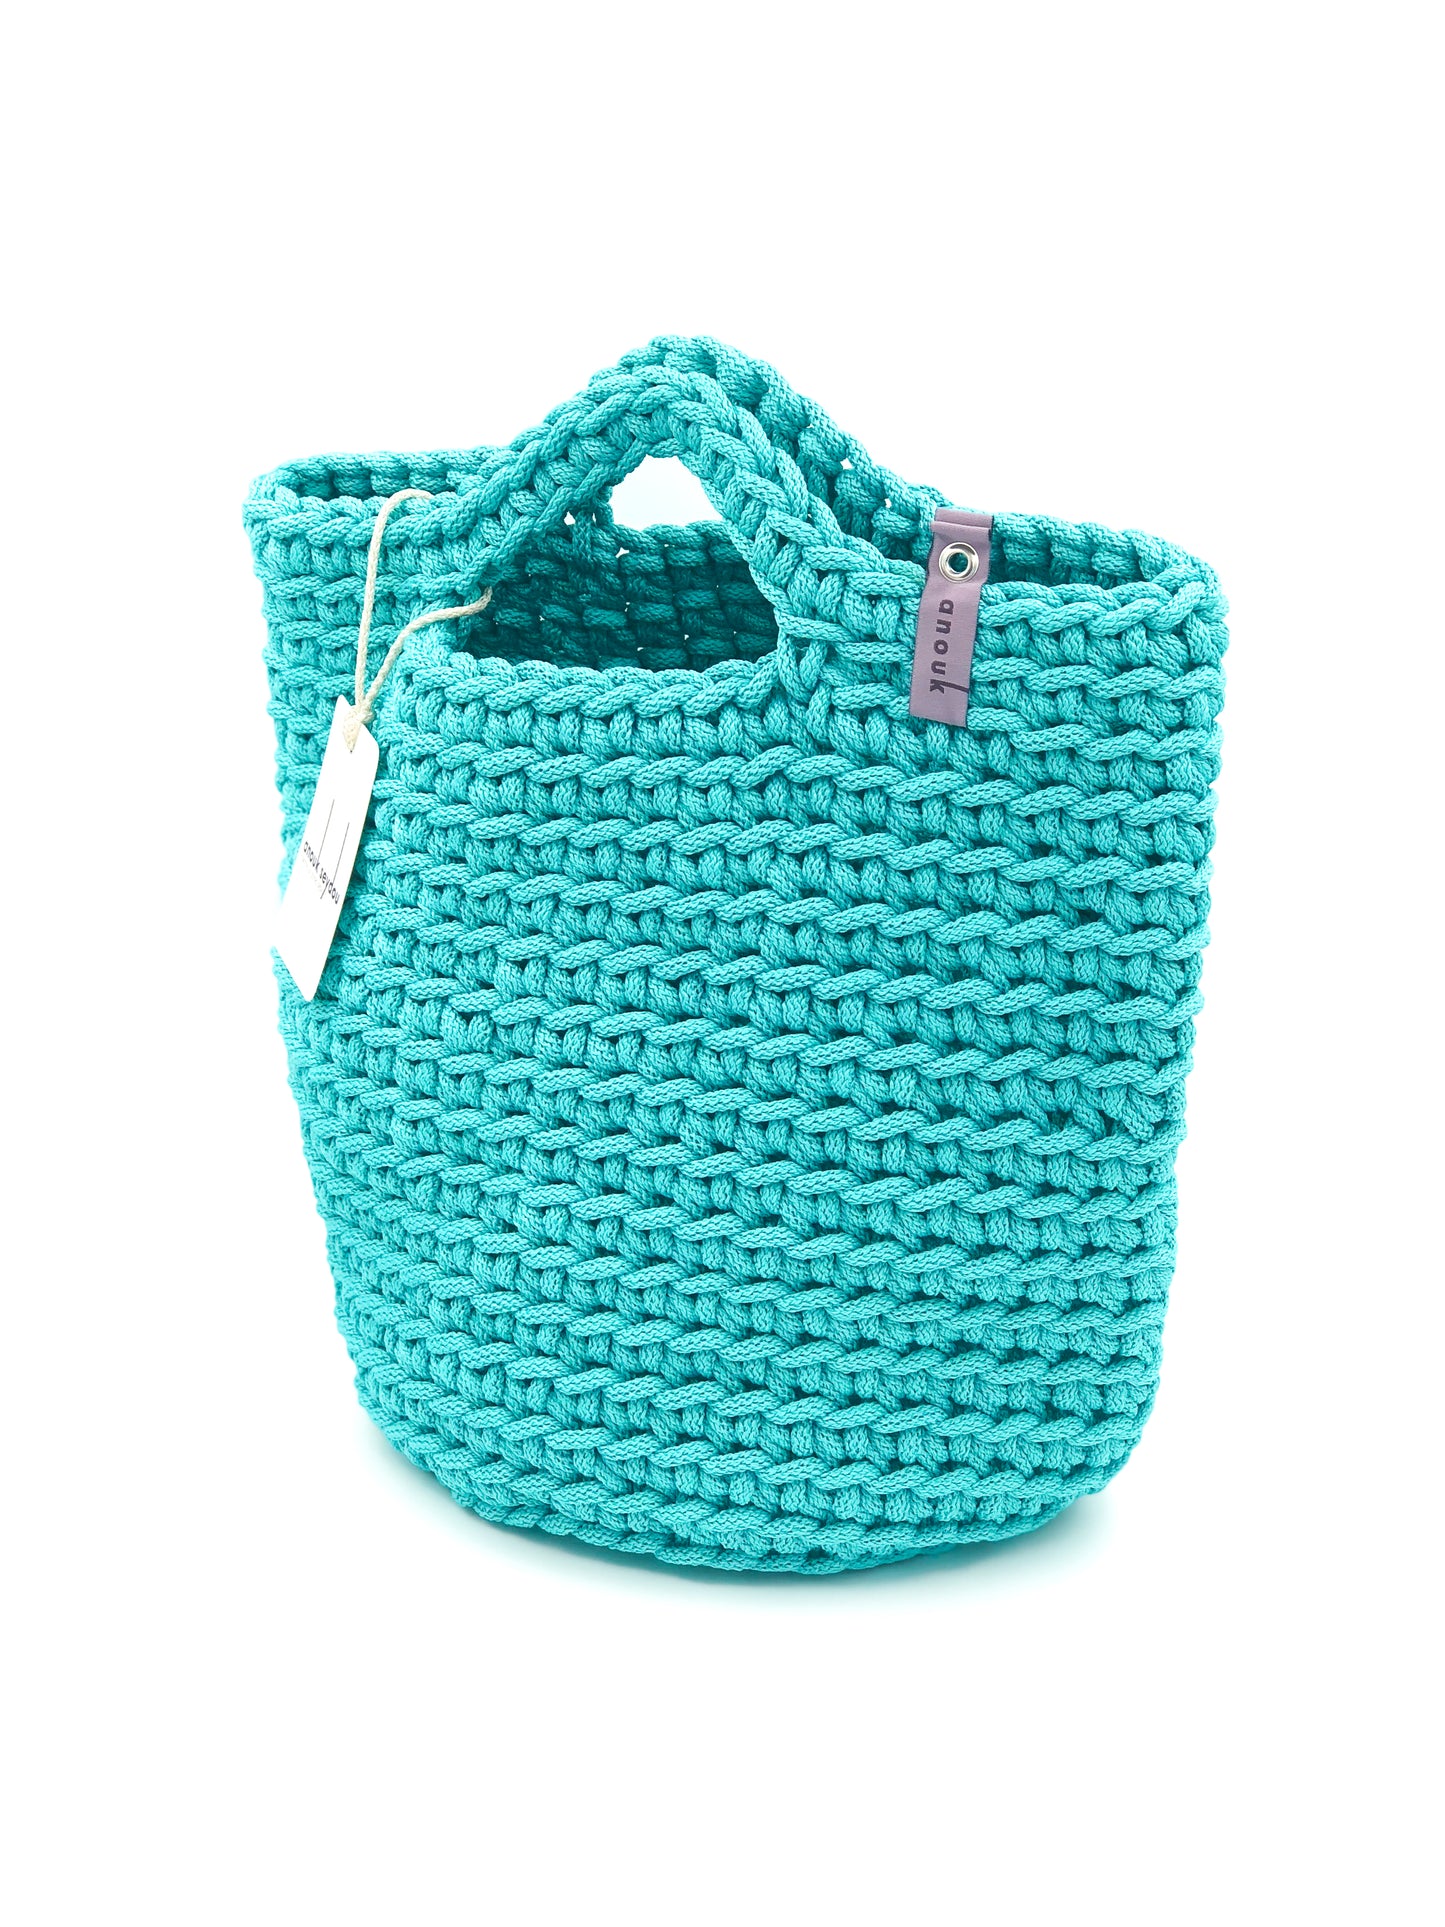 Scandinavian Style Handmade Crochet Tote Bag Teal with Short Handles